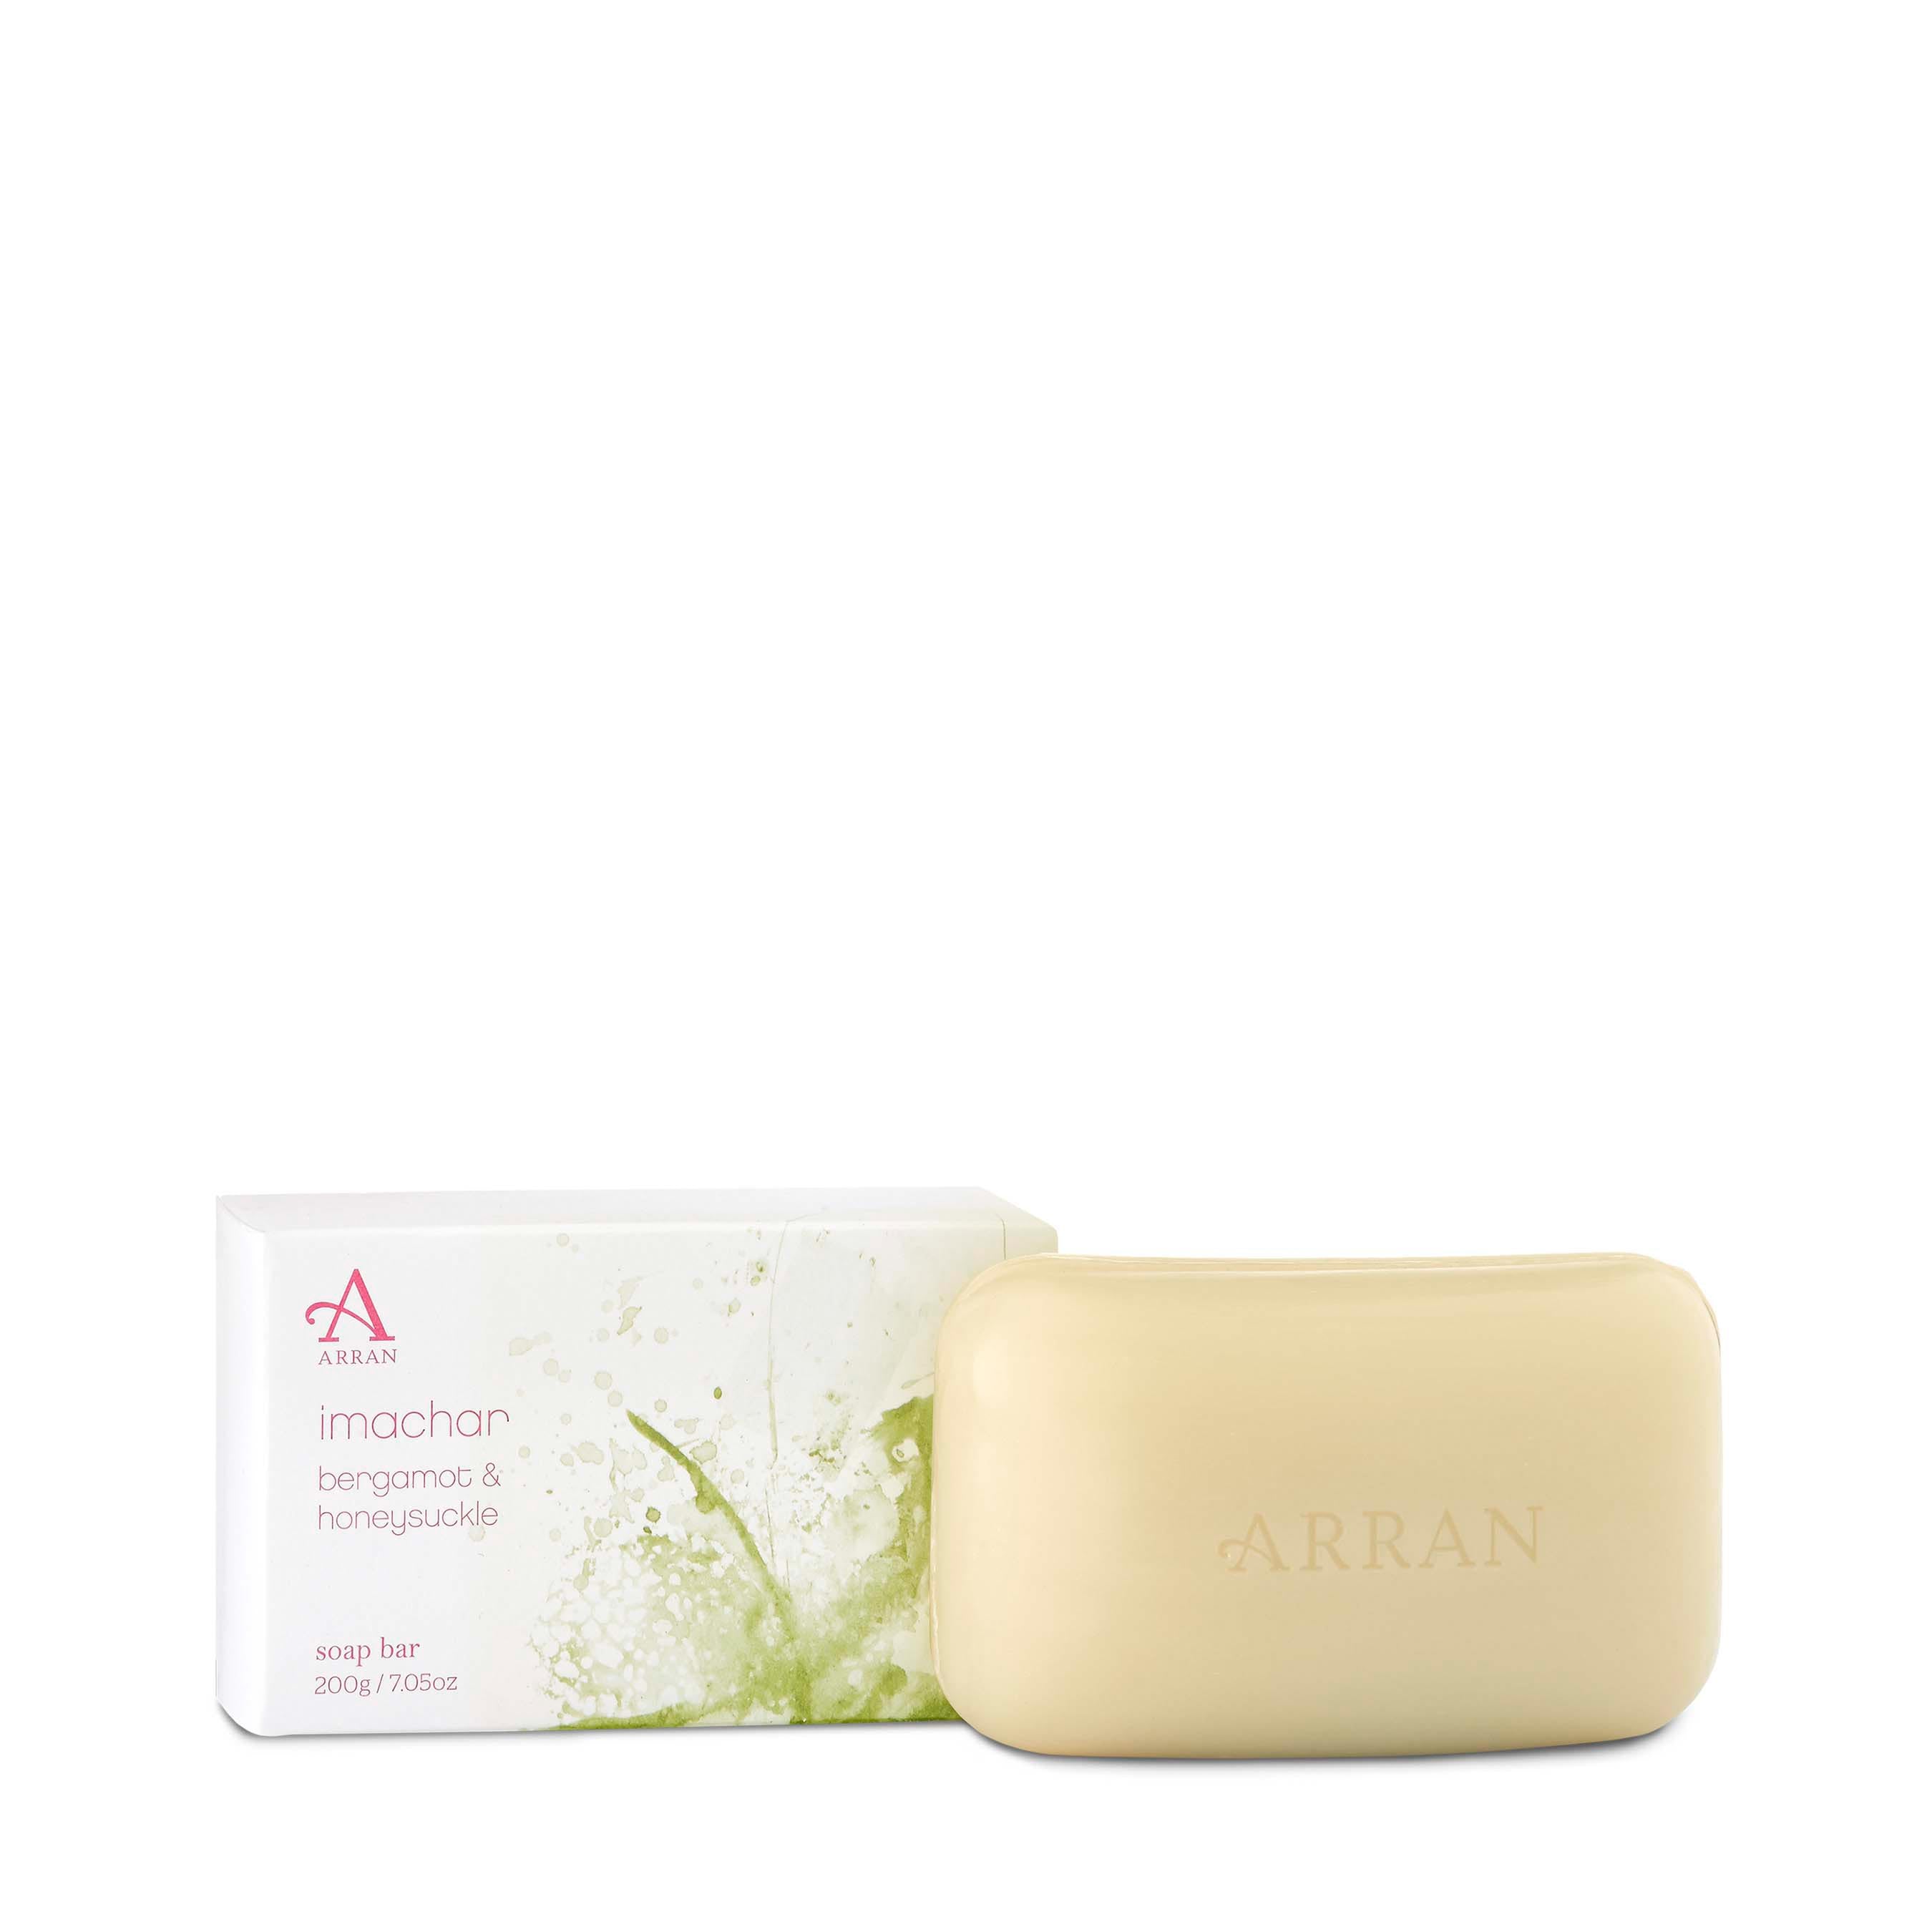 An image of ARRAN Imachar Soap Bar 200g | Made in Scotland | Bergamot & Honeysuckle Scent